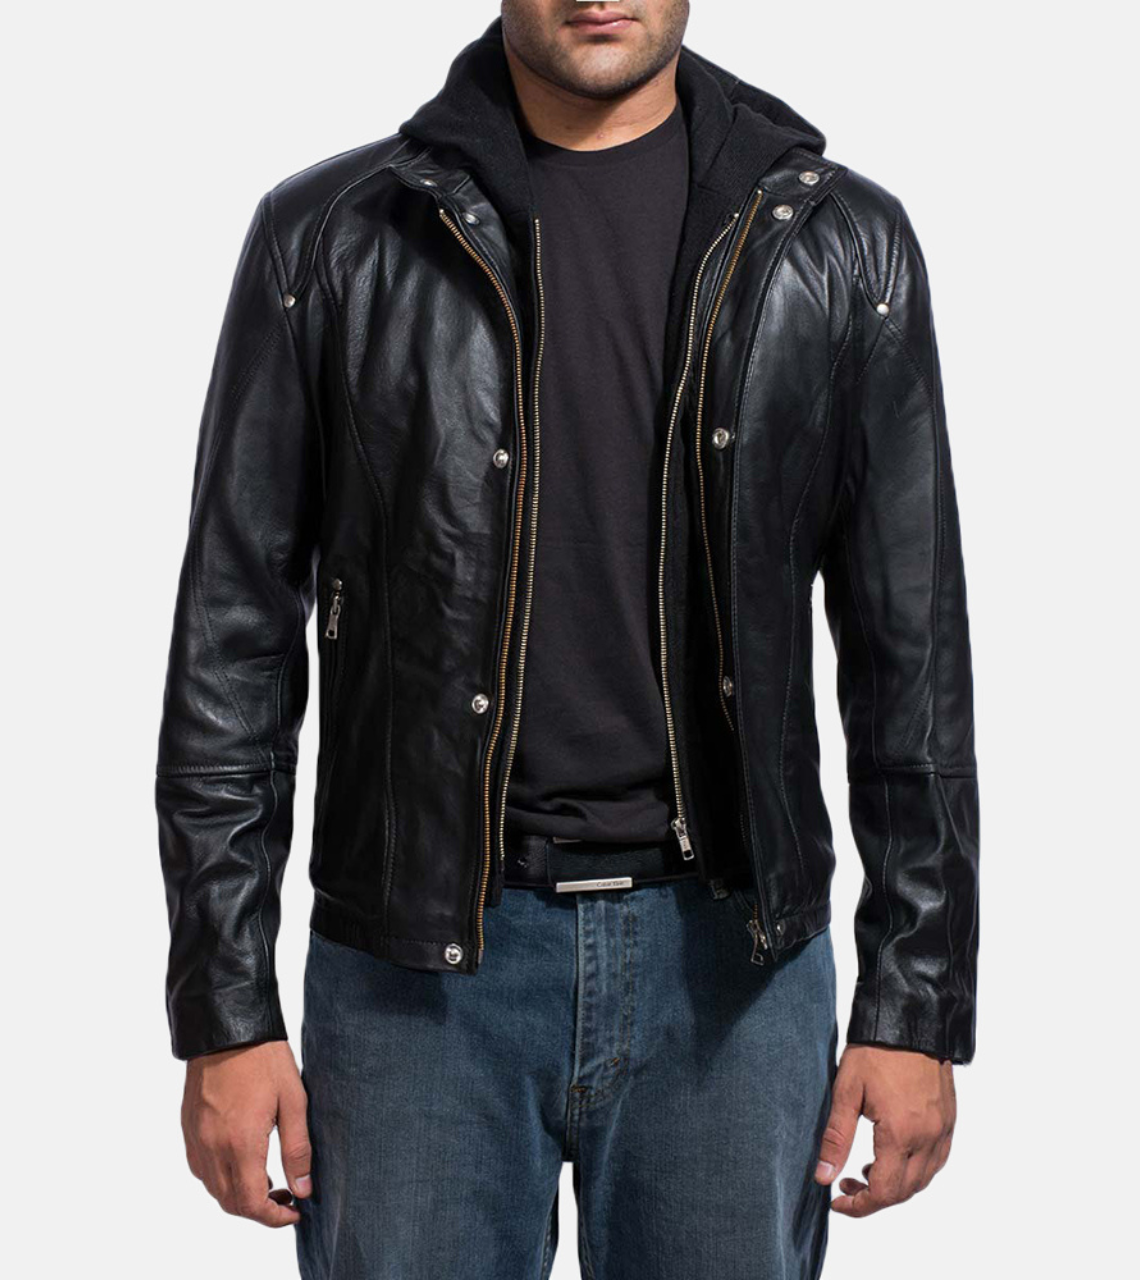 Swayz Men's Leather Jacket